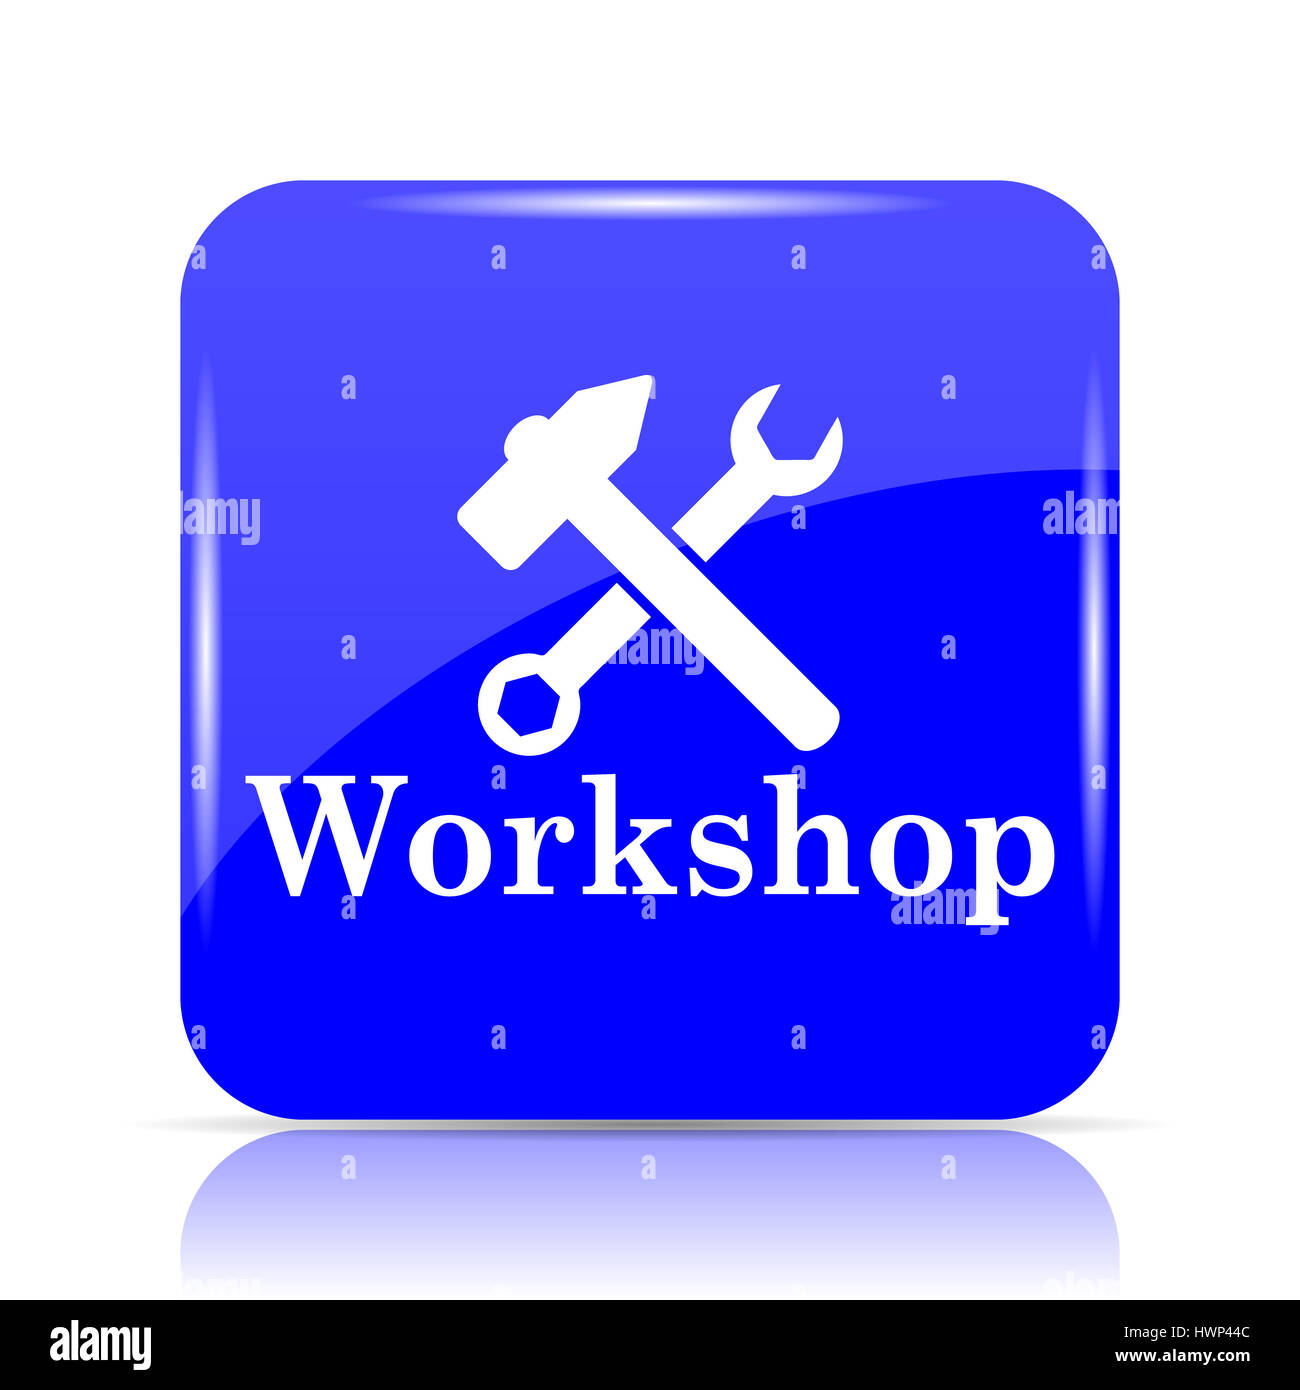 Workshop icon, blue website button on white background. Stock Photo